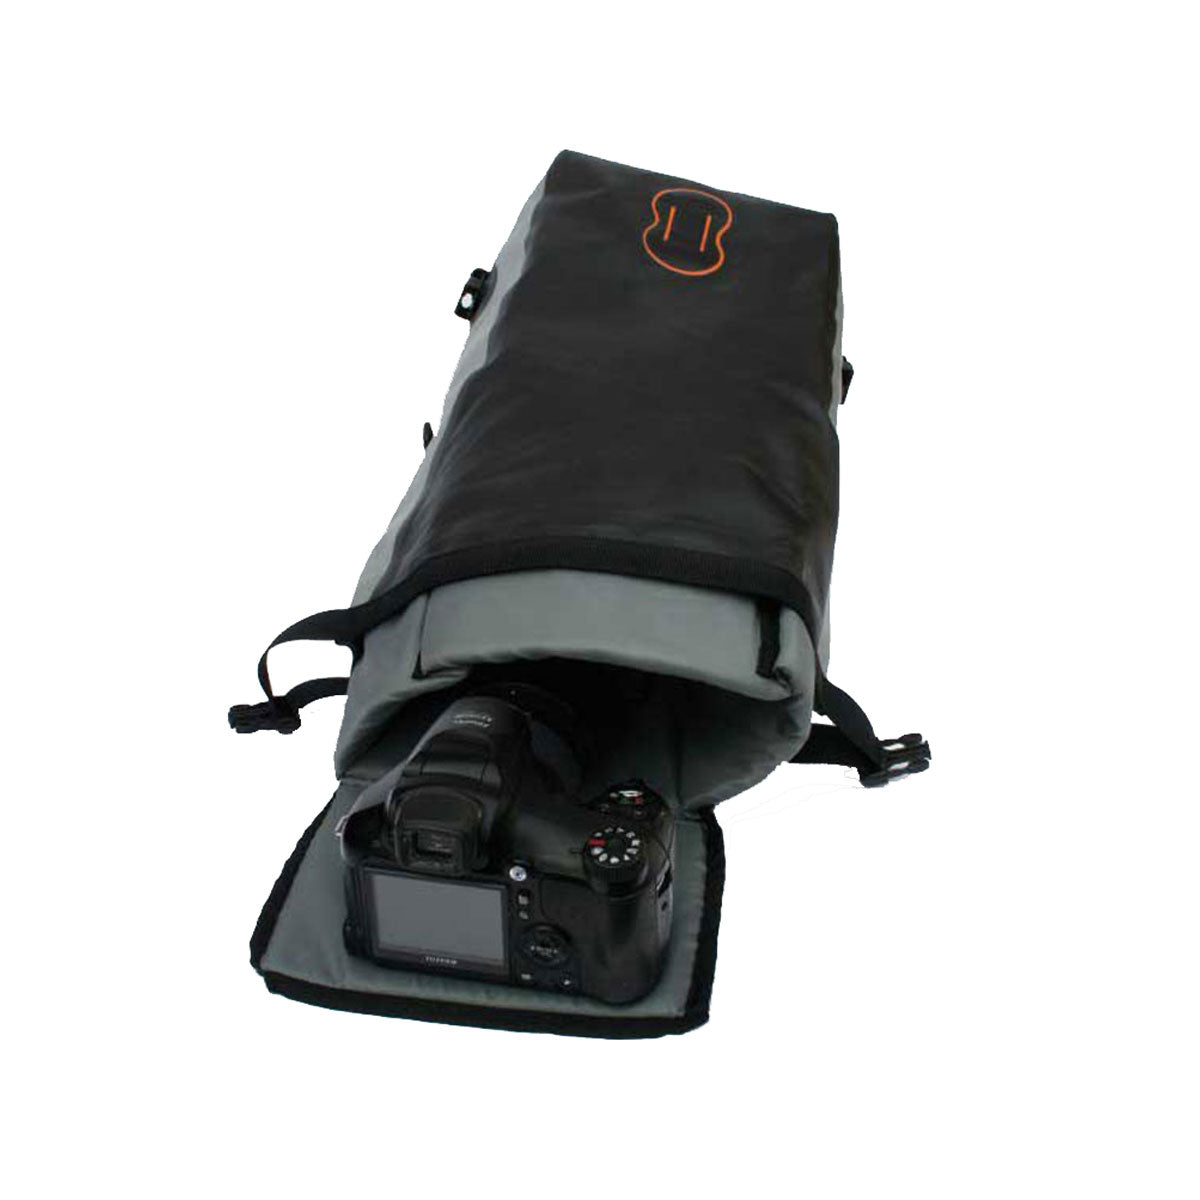 Aquapac: Stormproof Waterproof DSLR Camera Pouch - Outdoor Travel Gear 4